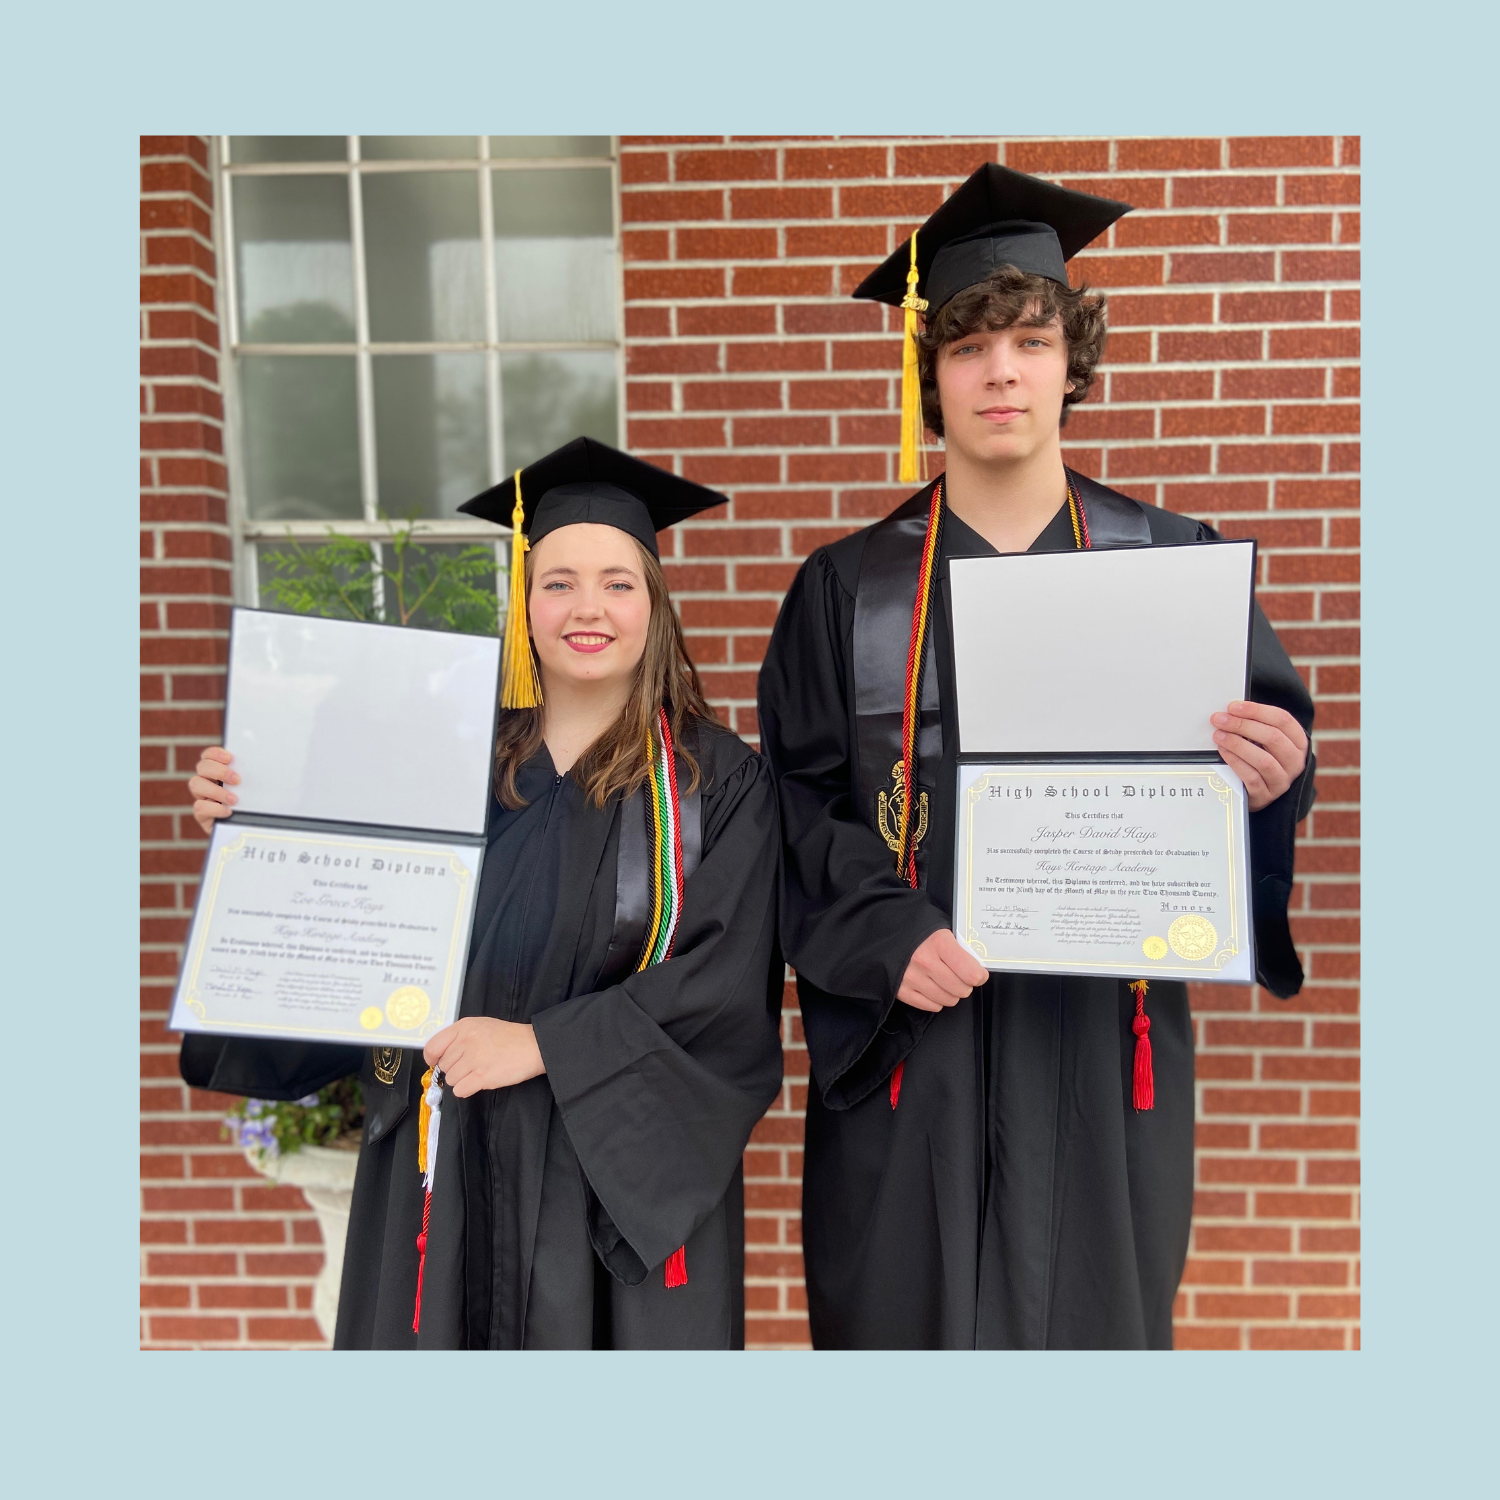 pic of boy and girl homeschool graduates with diplomas